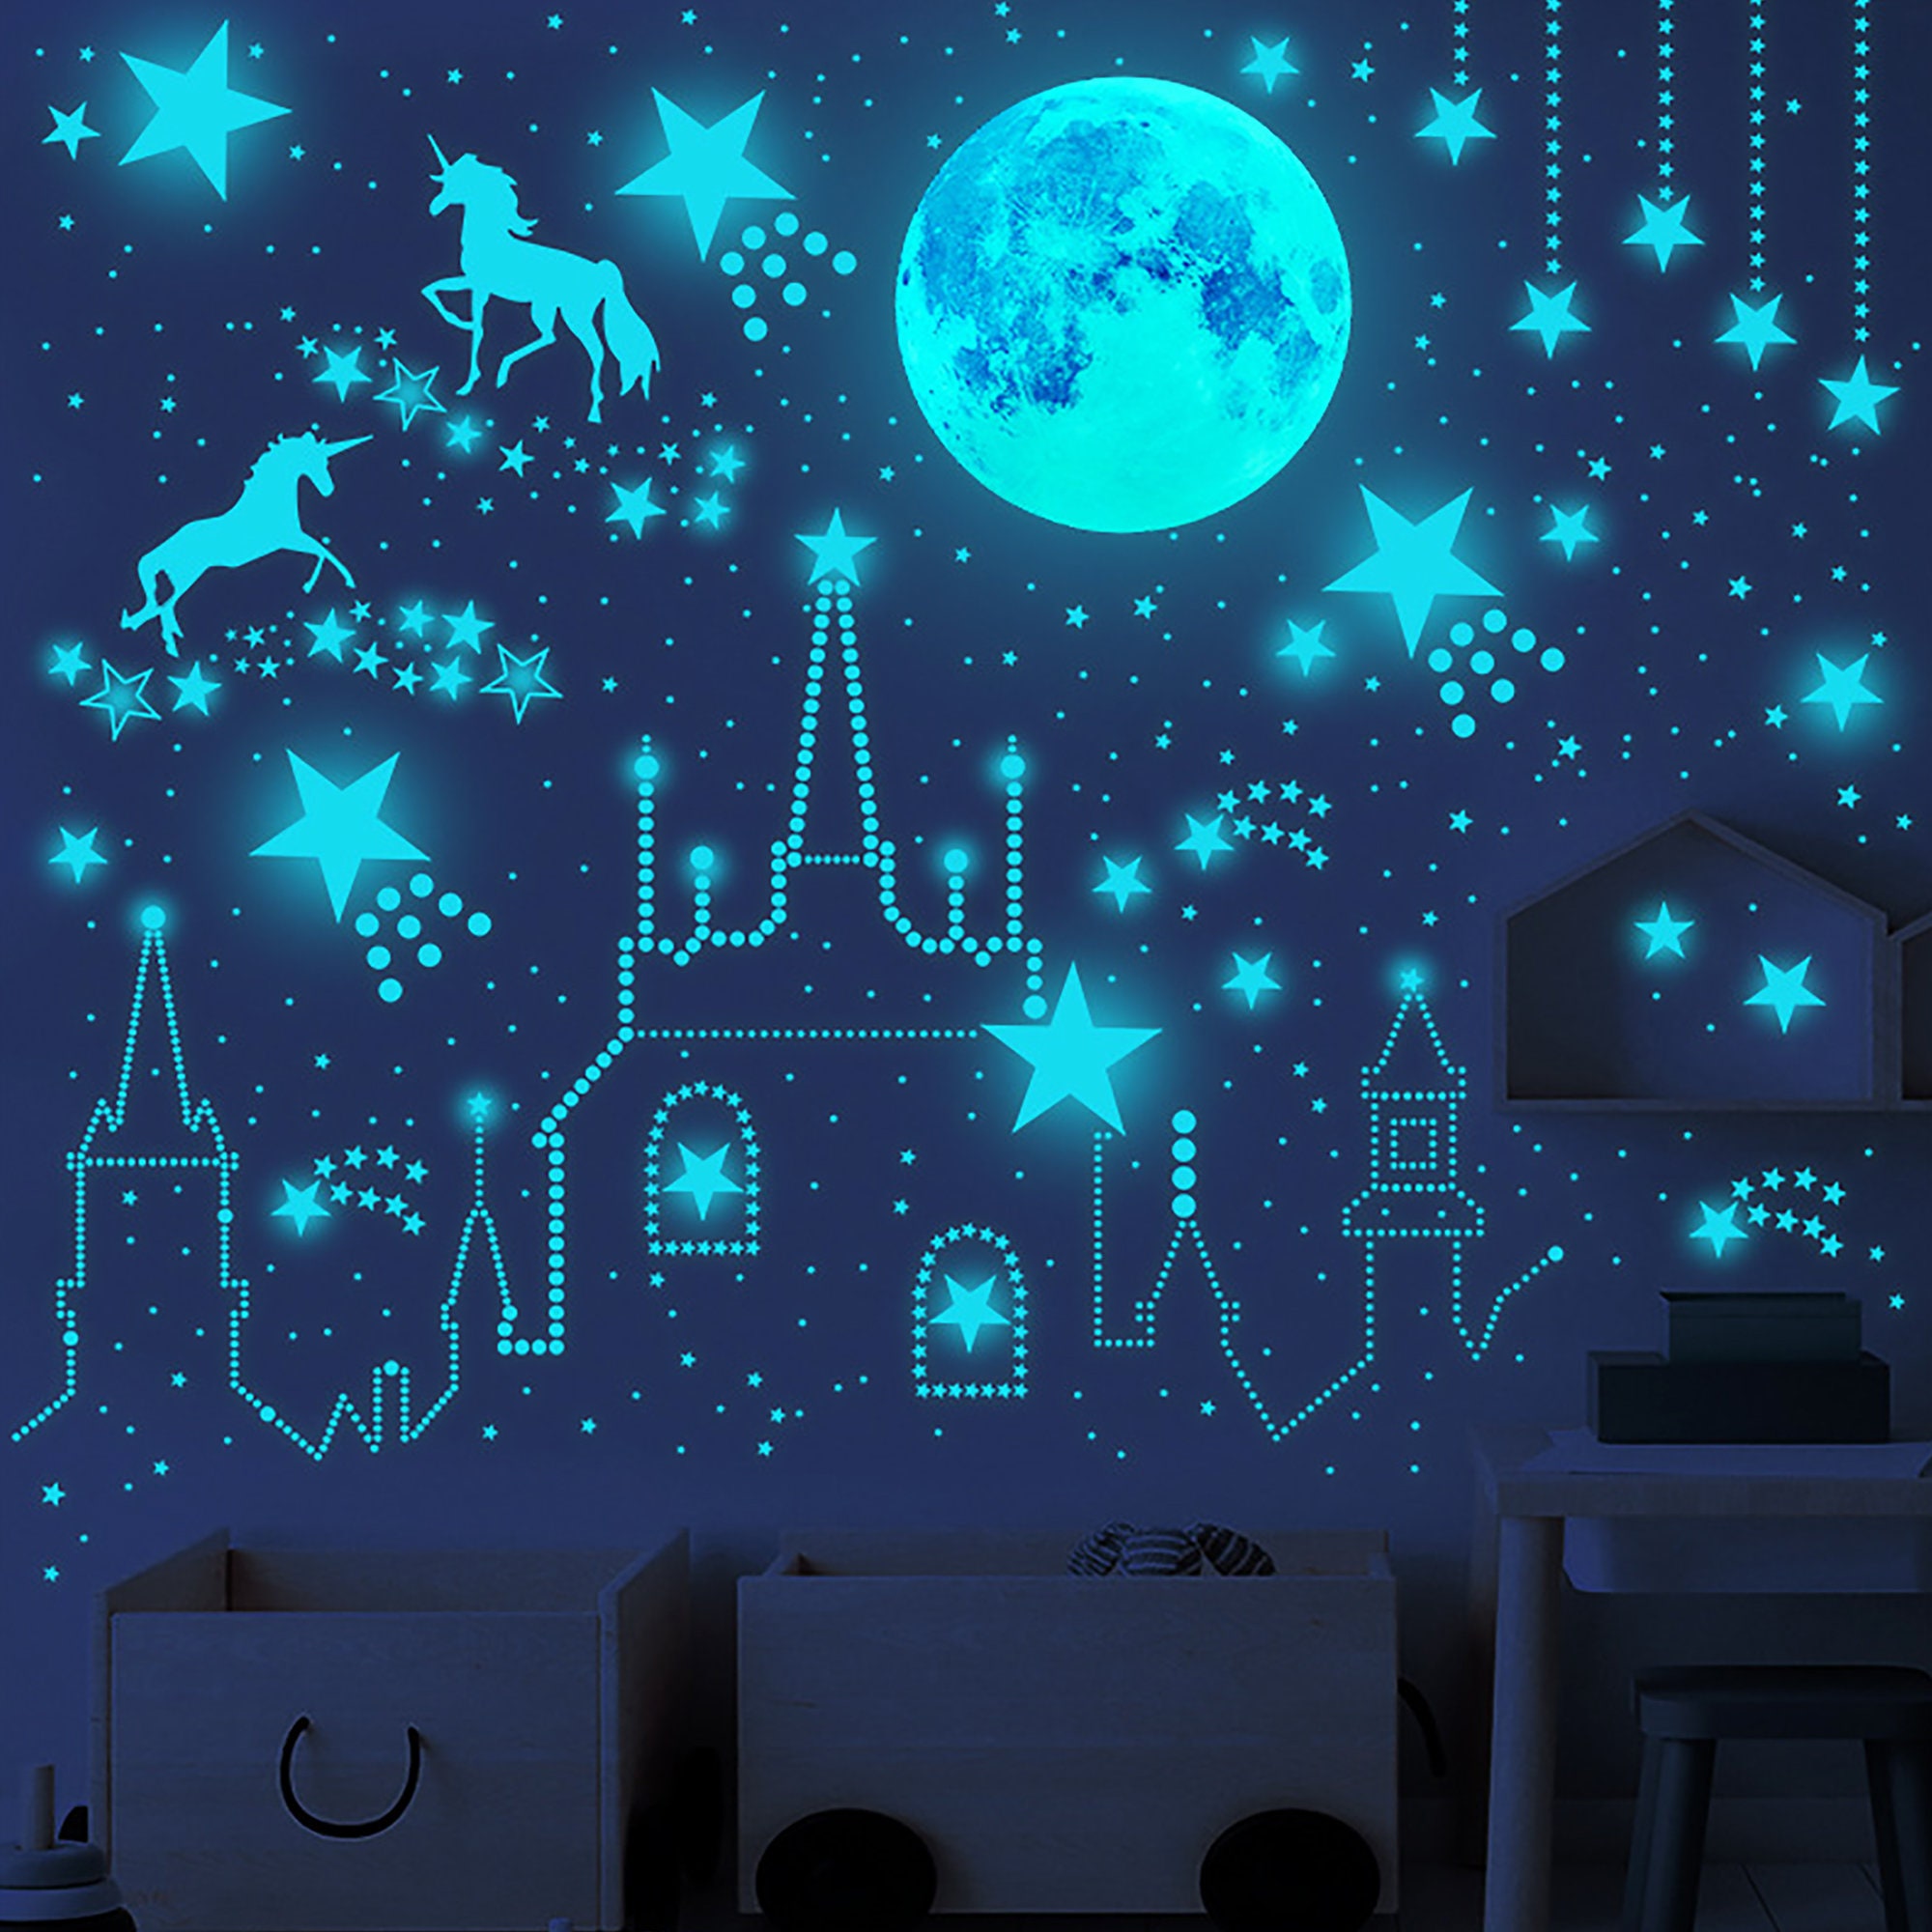 Glow in the Darkluminous Wall Stickers Stars Moon Castle Unicorn